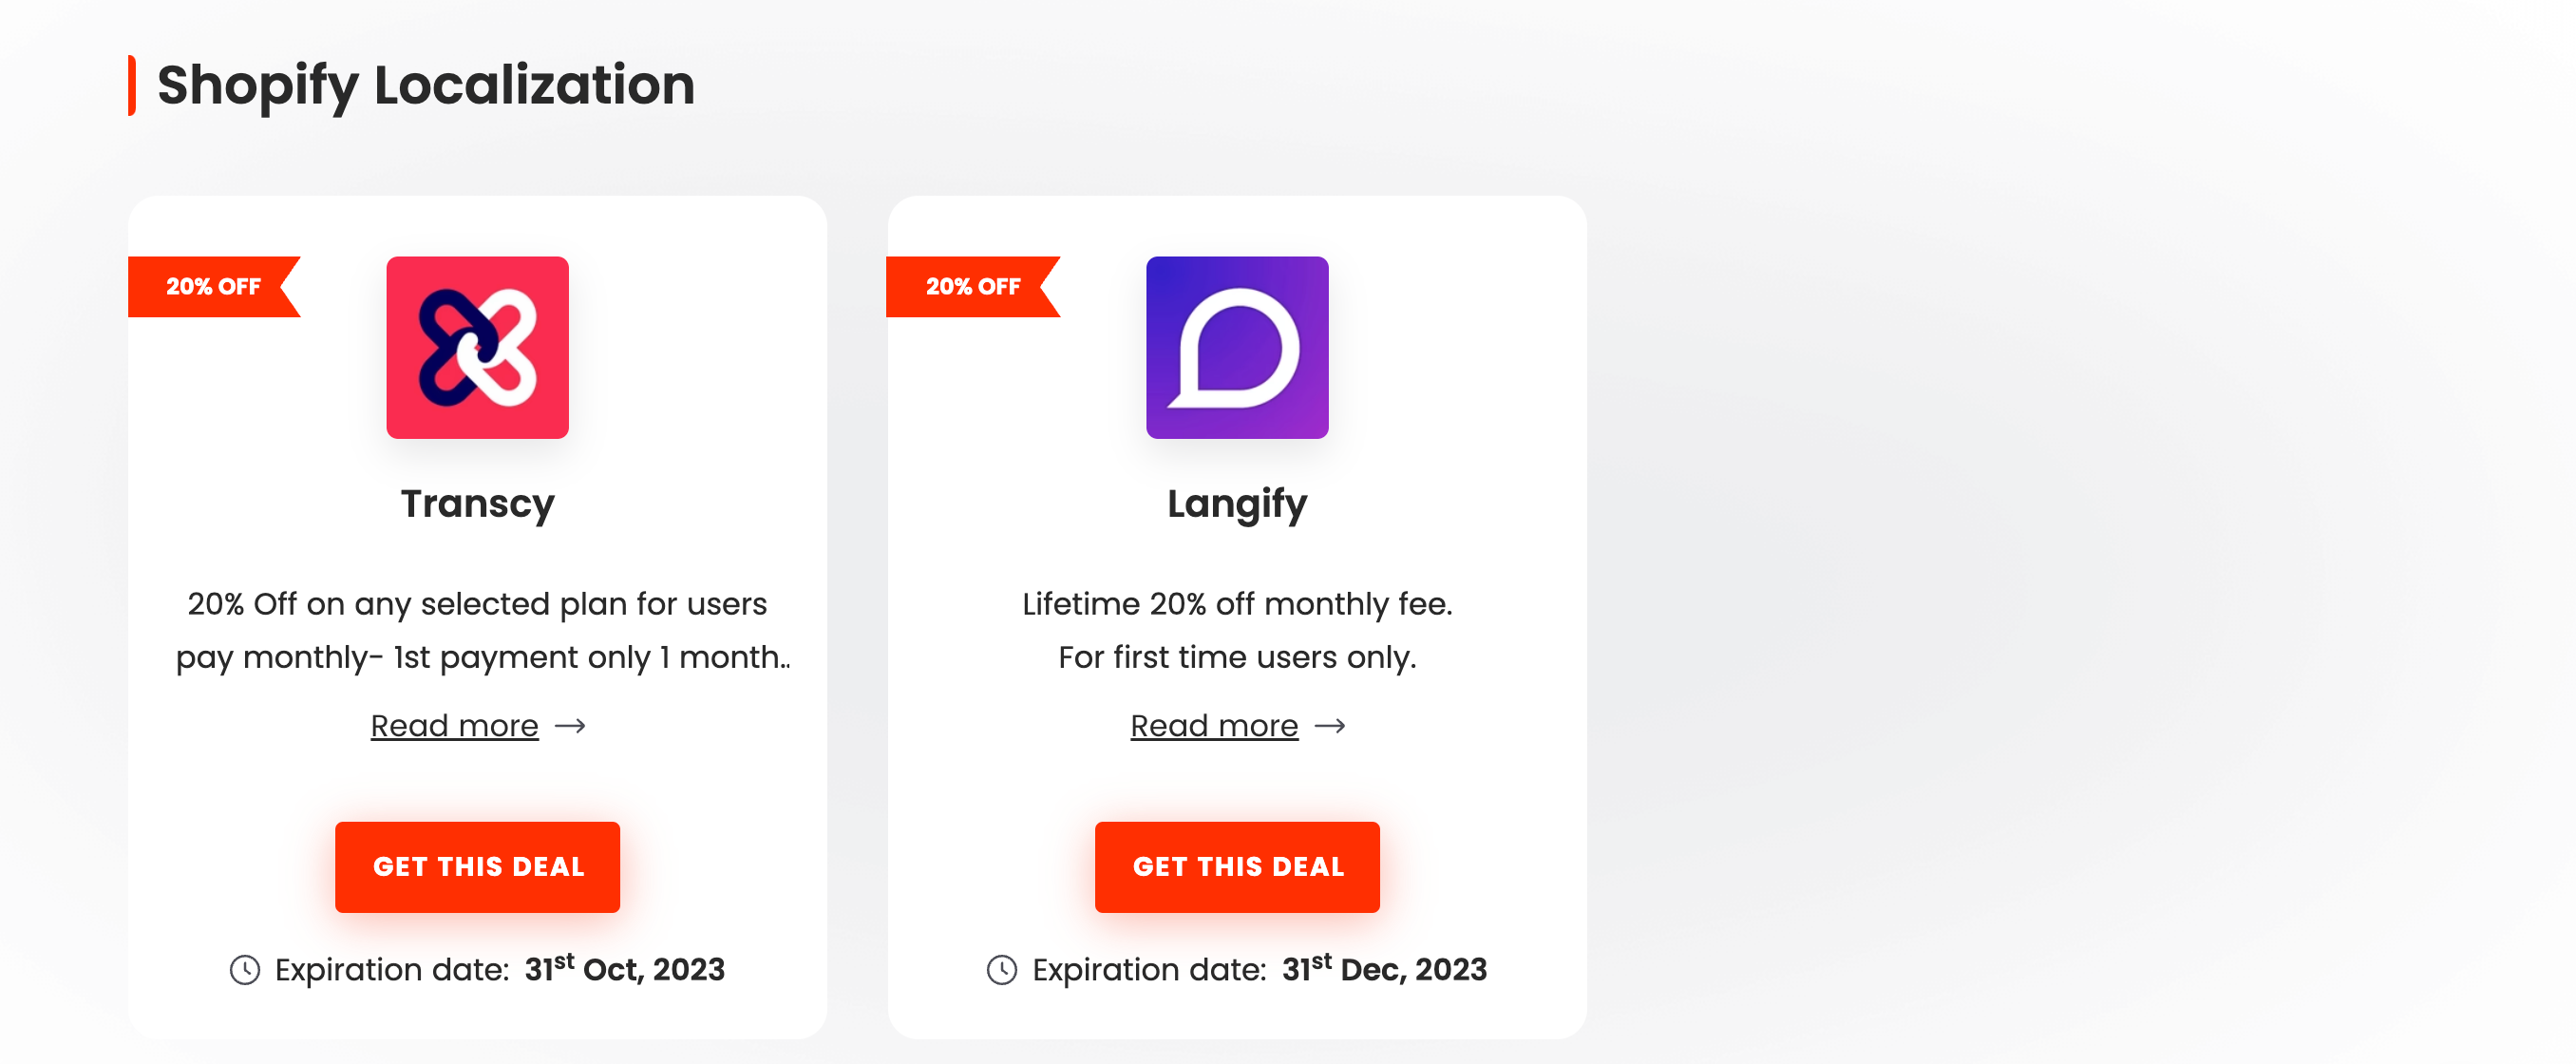 shopify localization app deal